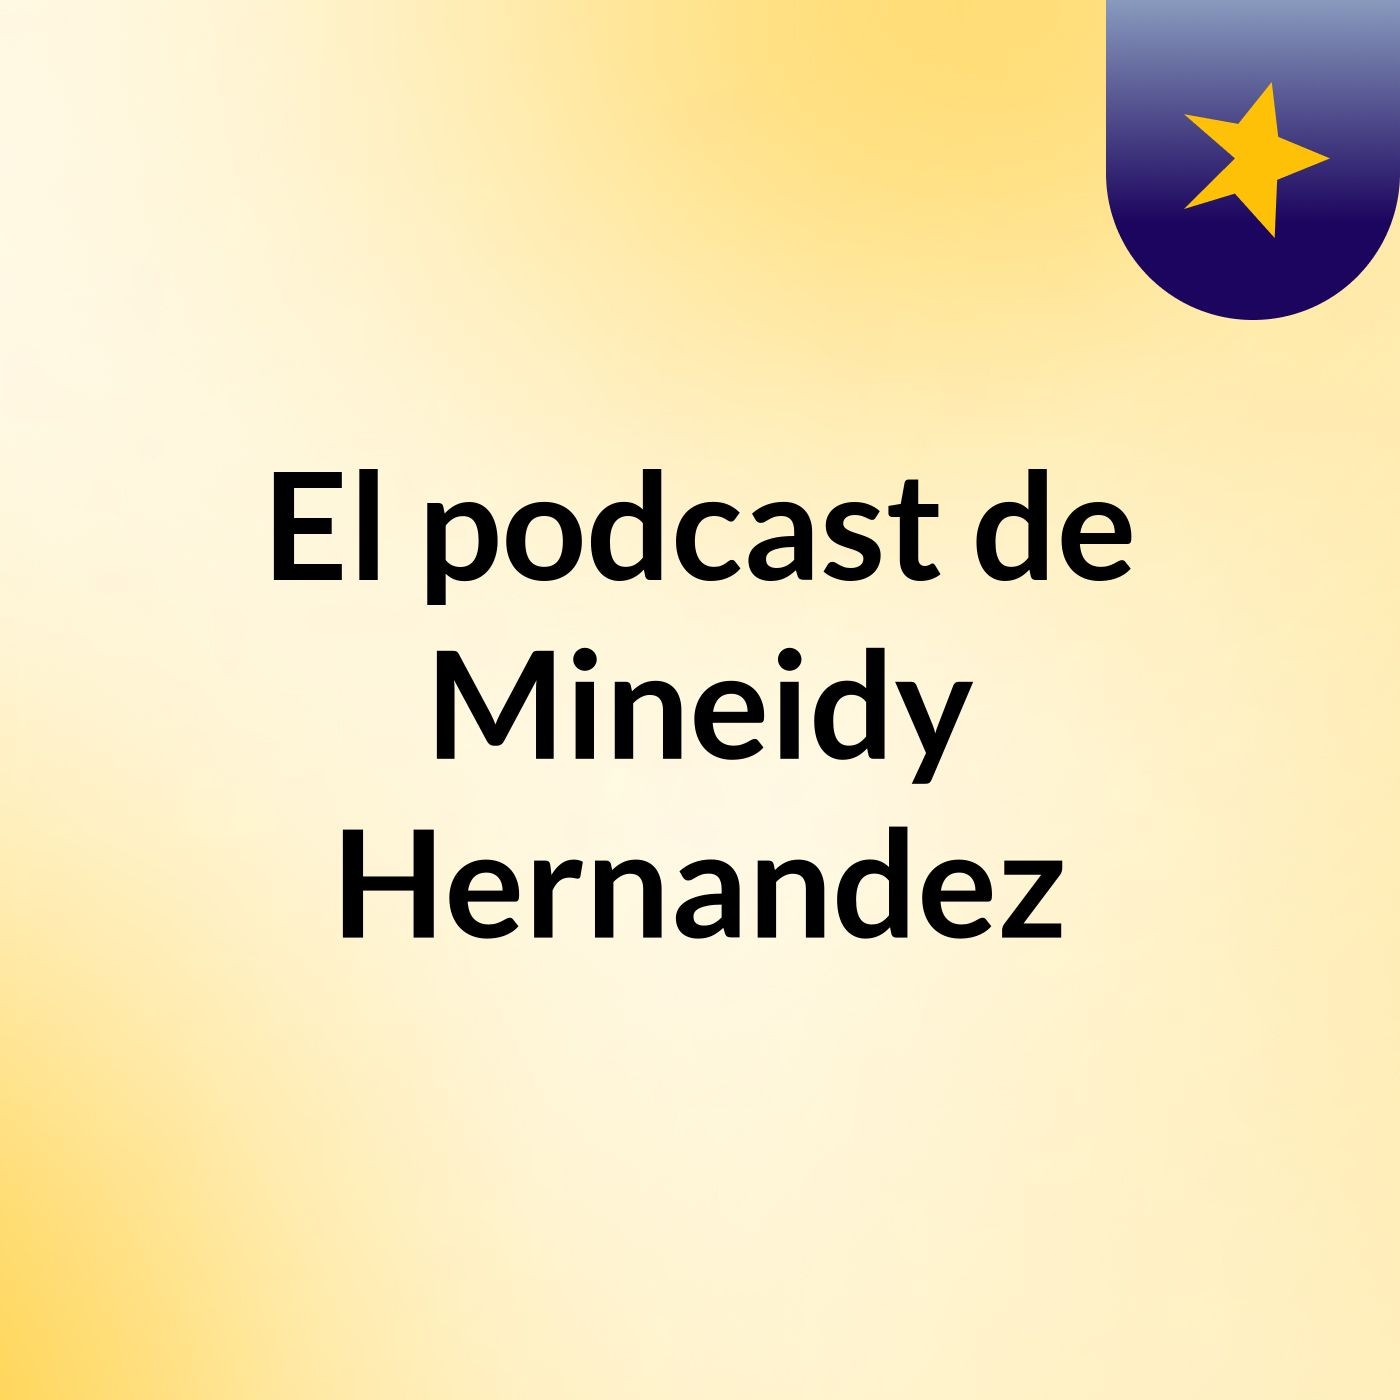 Episodio 3 - El podcast de Mineidy Hernandez